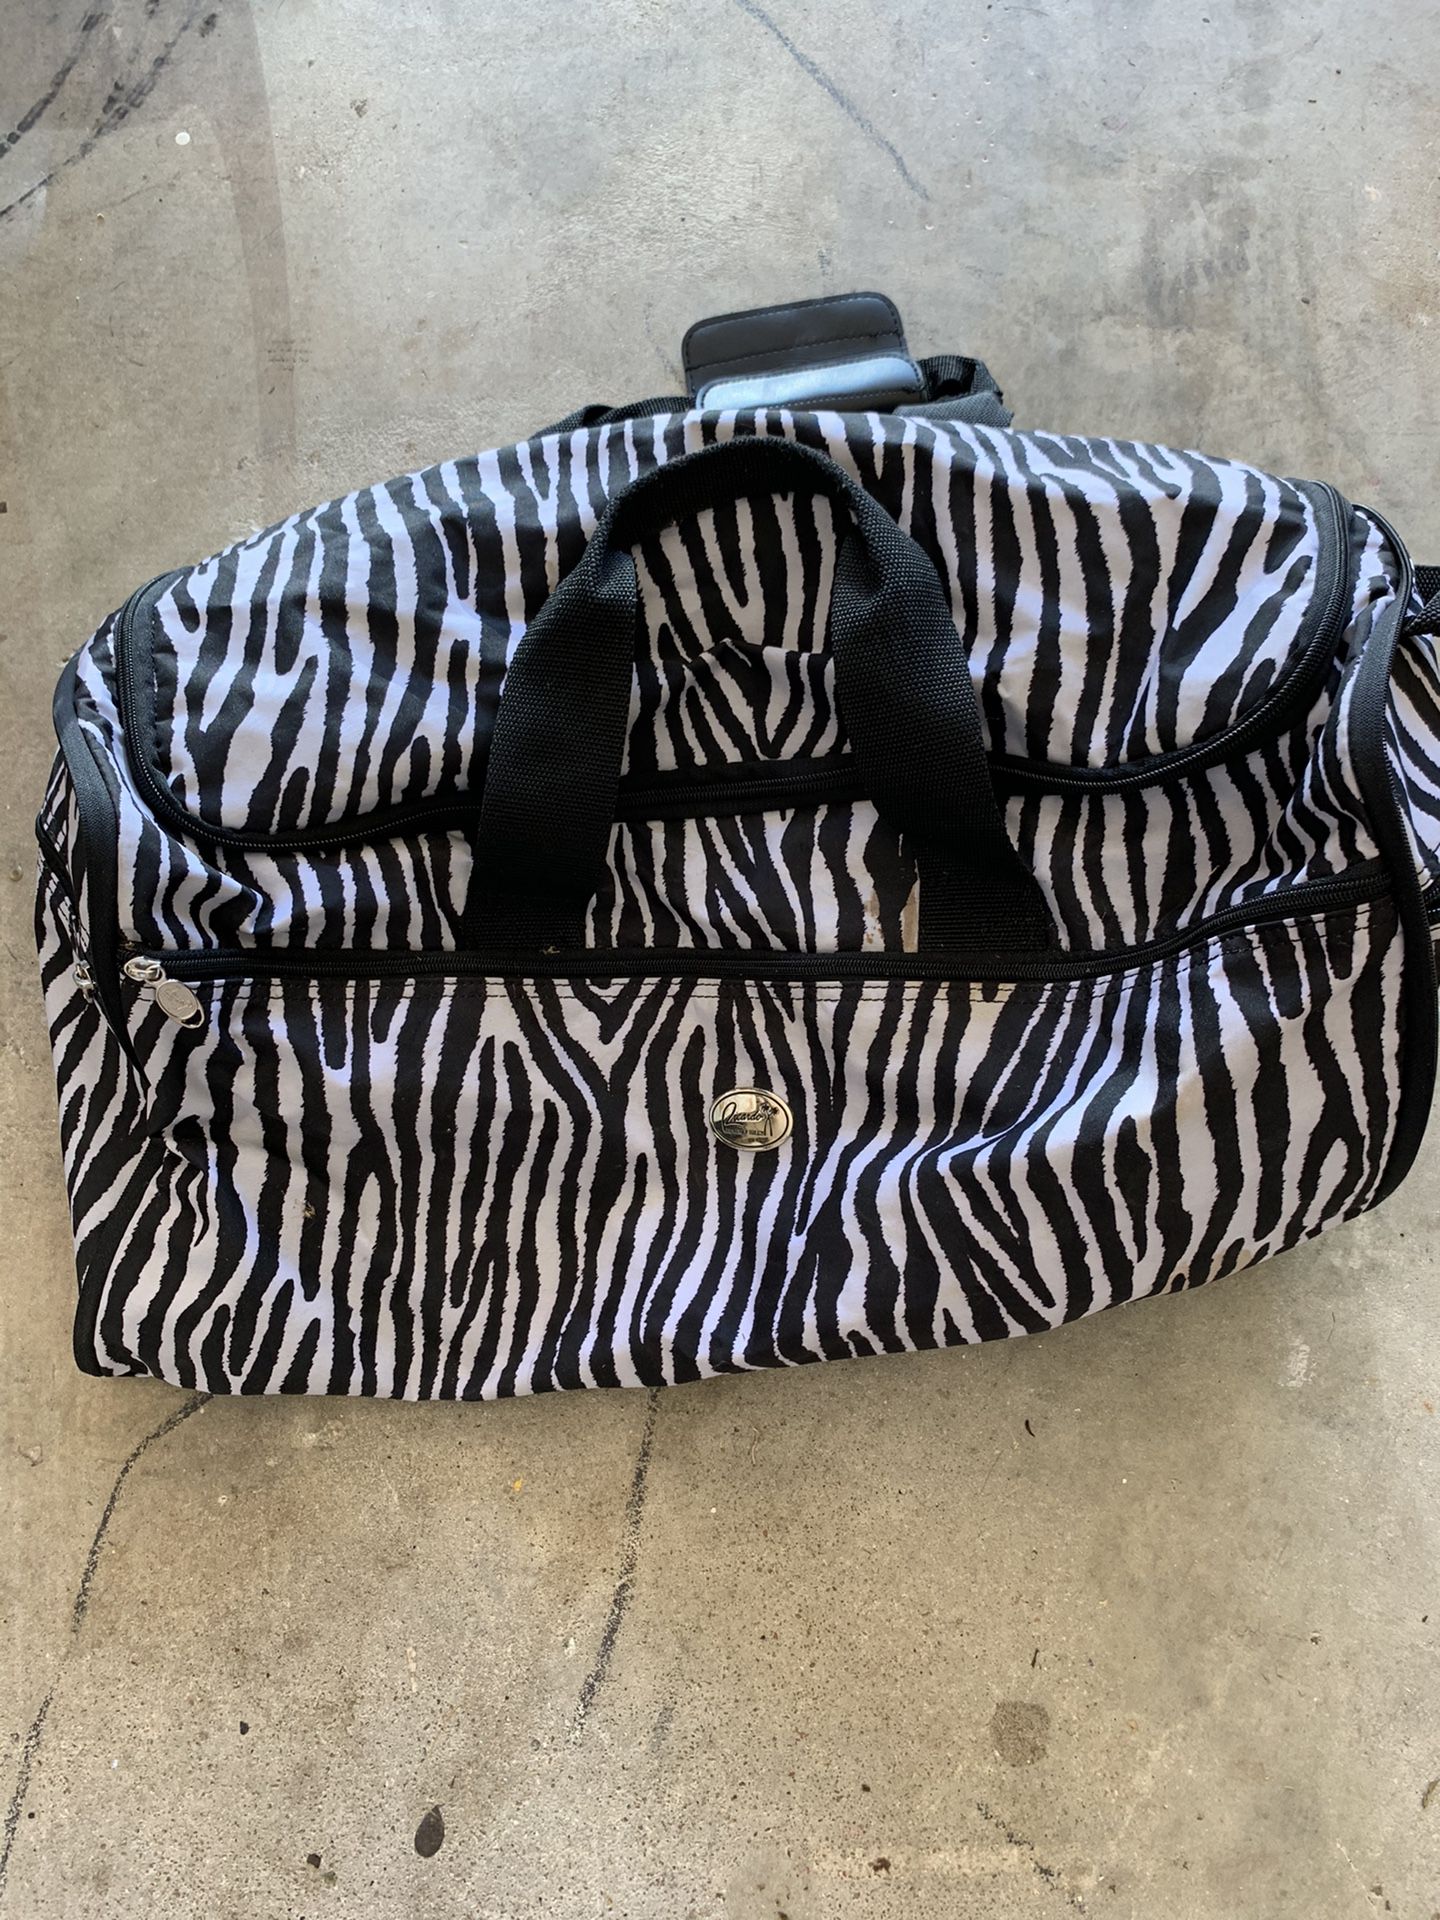 Zebra Duffle bag